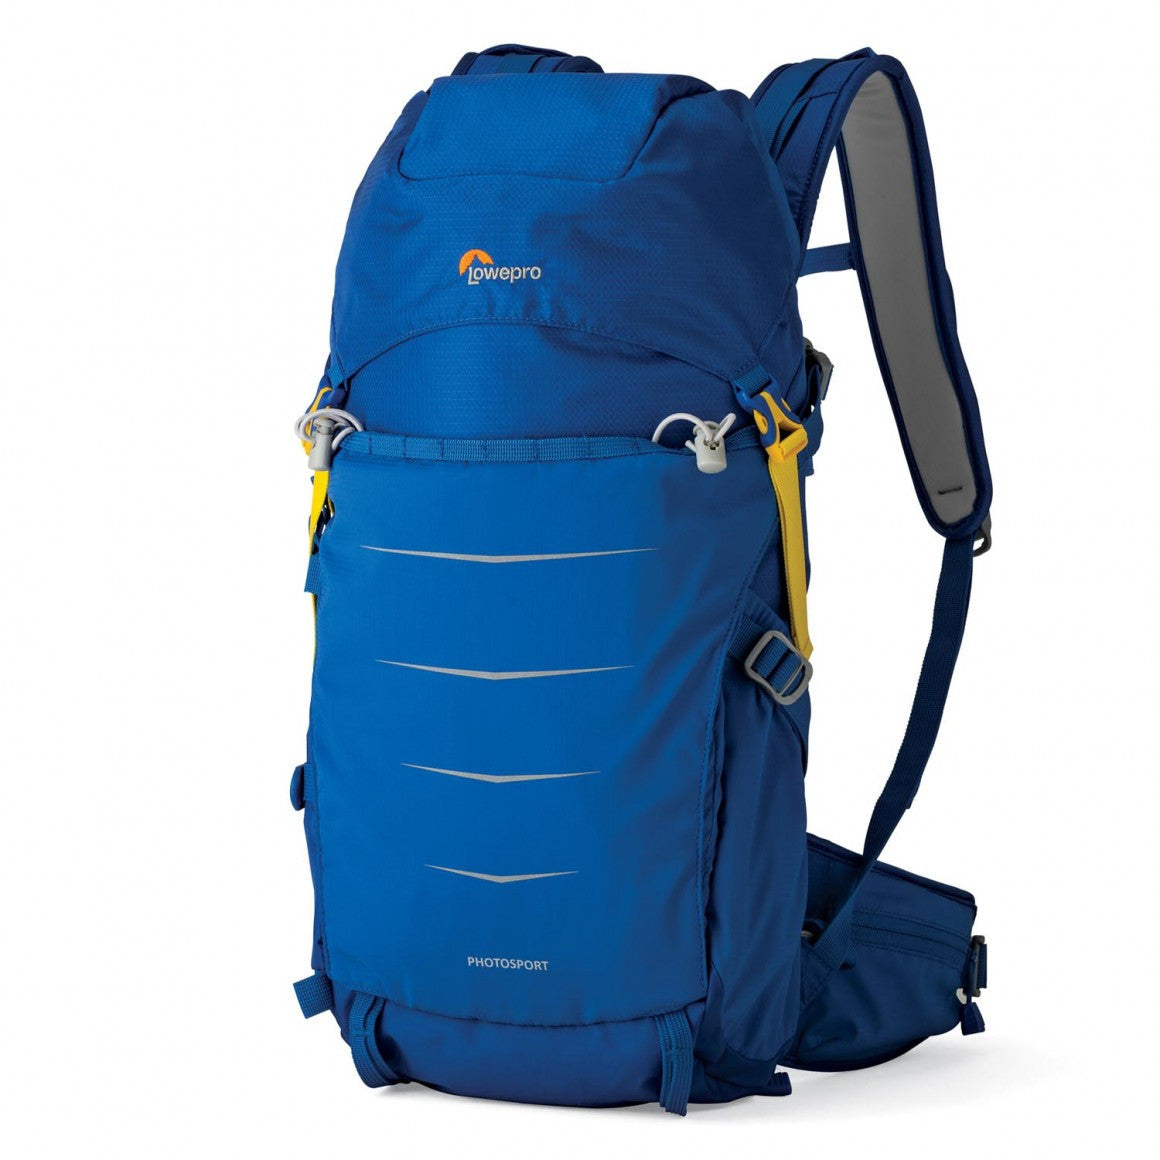 Lowepro Photo Sport 200 AW II Backpack (Blue), bags backpacks, Lowepro - Pictureline  - 1